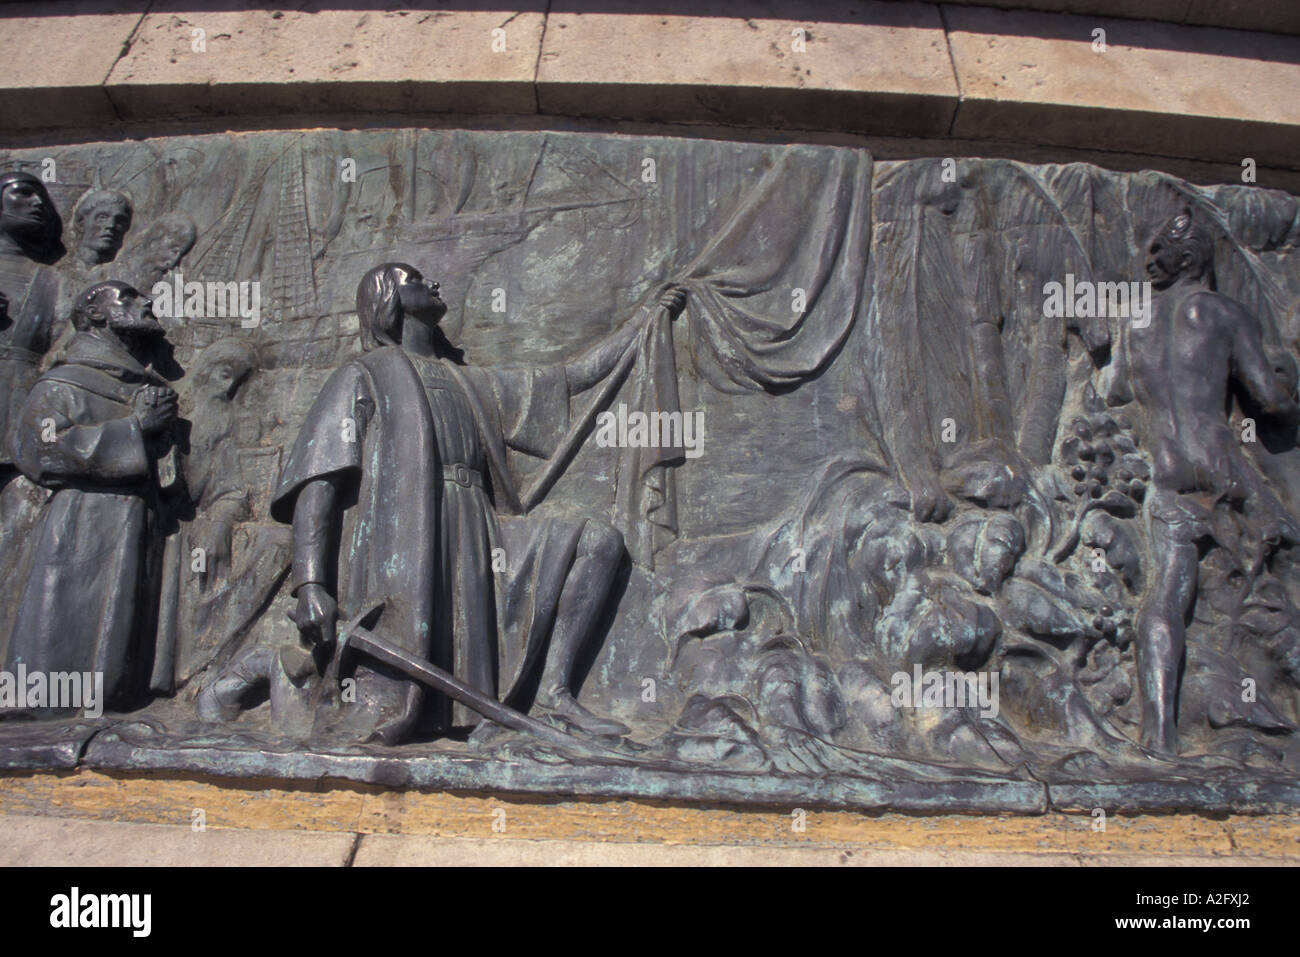 Europa, Spanien, Barcelona, Kolumbus-Denkmal, Landung in der neuen Welt Stockfoto